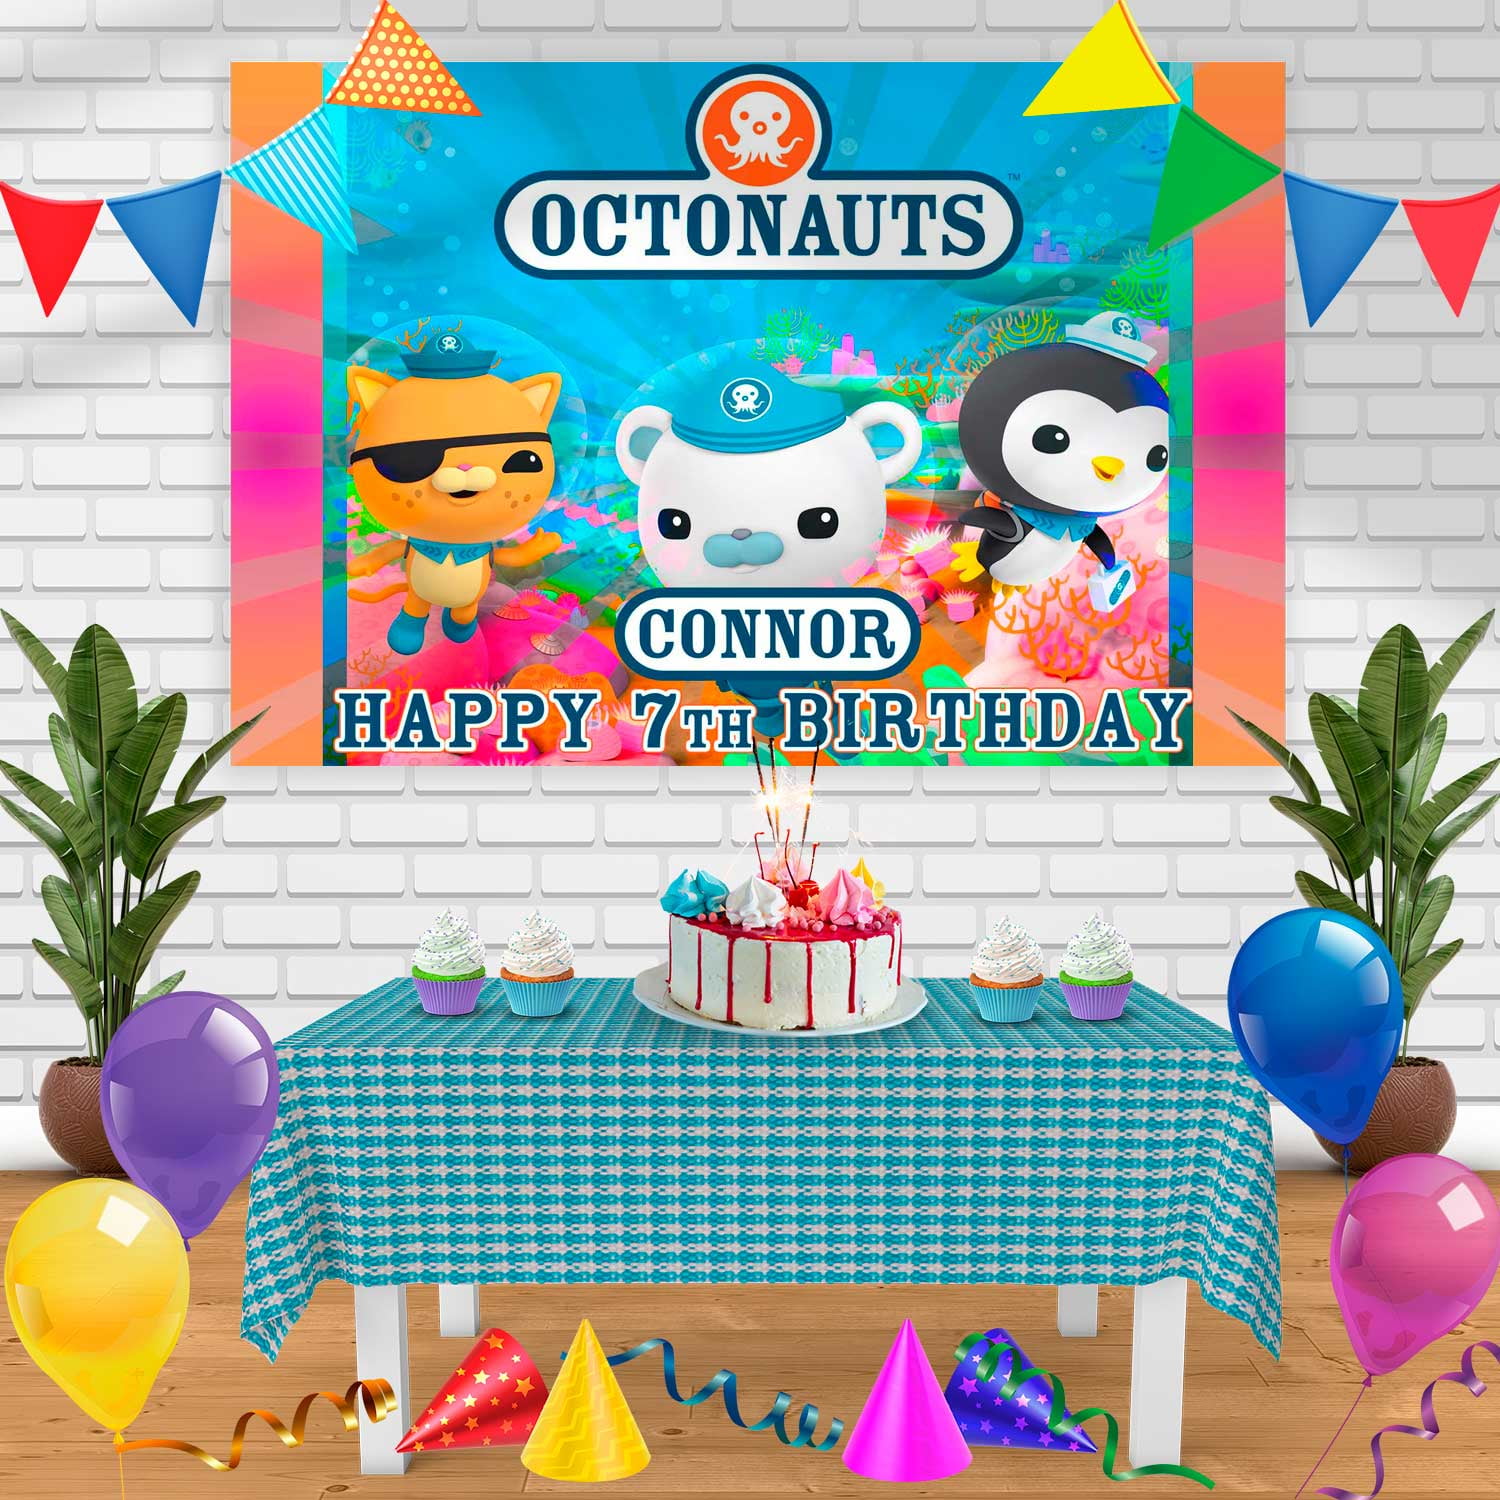 Octonauts Stuffed Animals, Octonauts Birthday Party